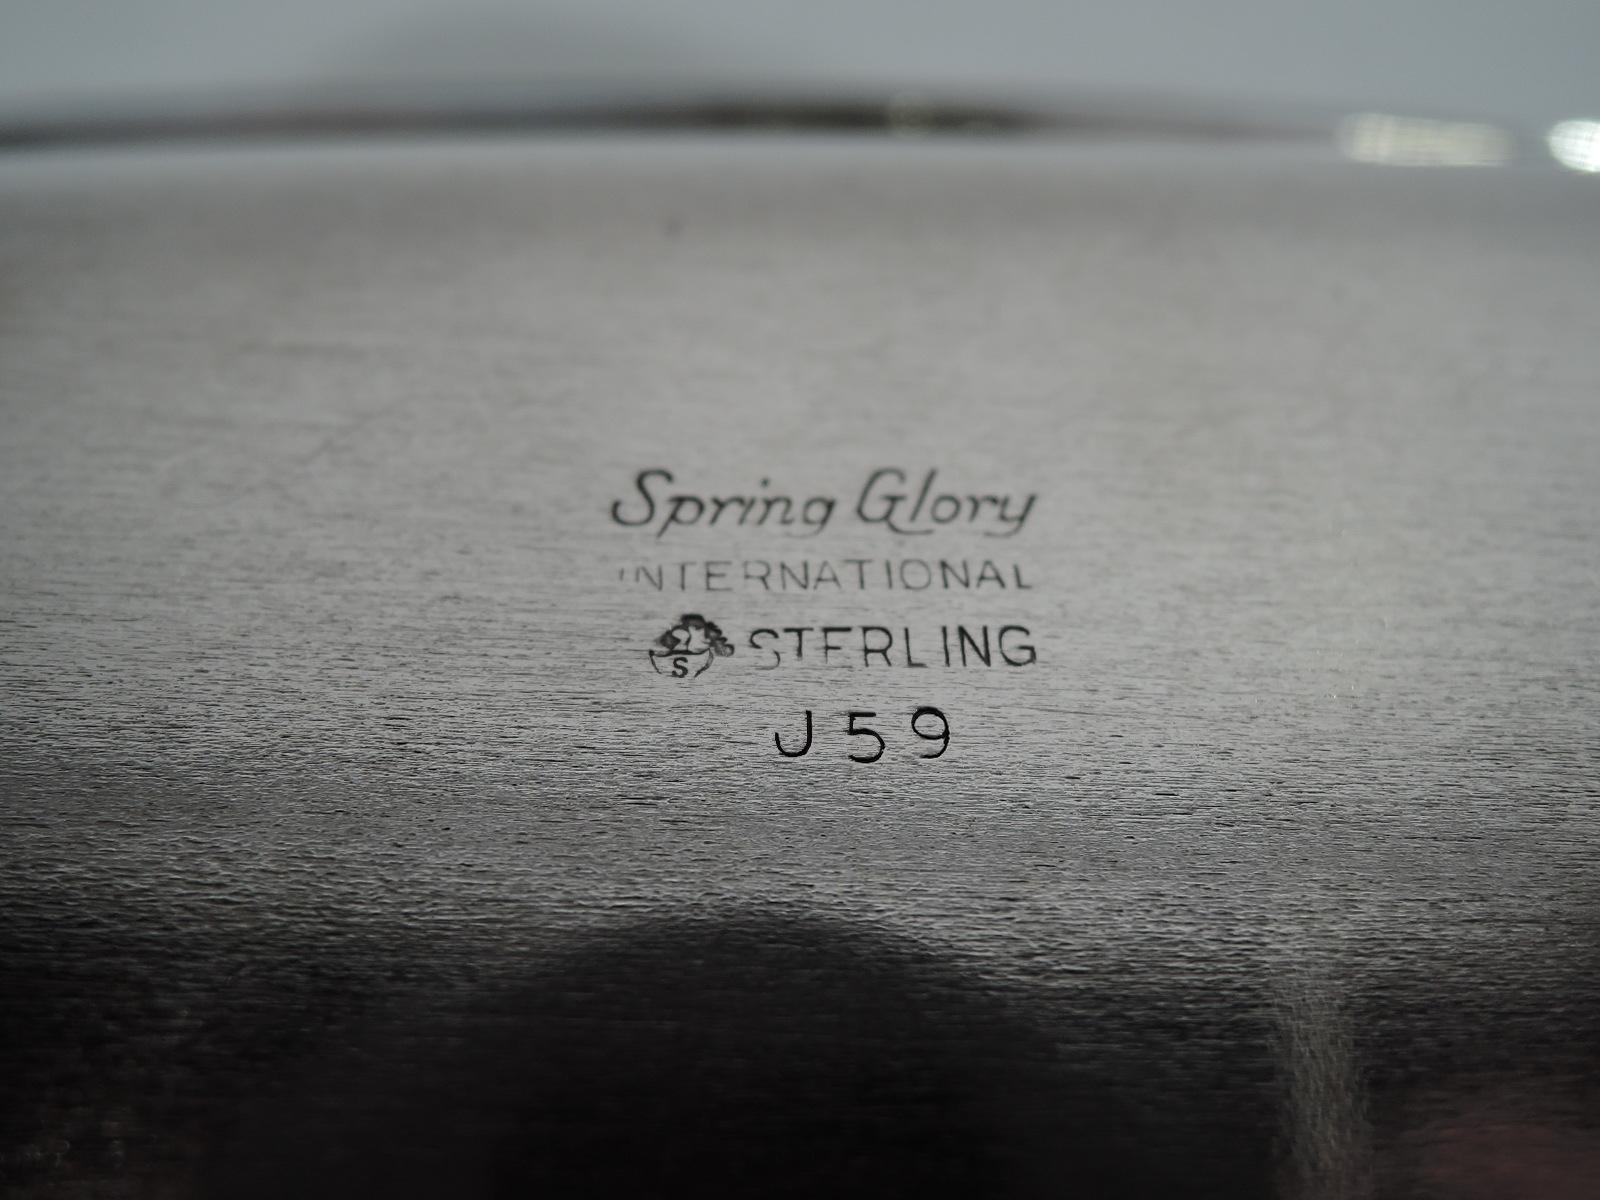 American International Sterling Silver Bowl in Jensen-Inspired Spring Glory Pattern